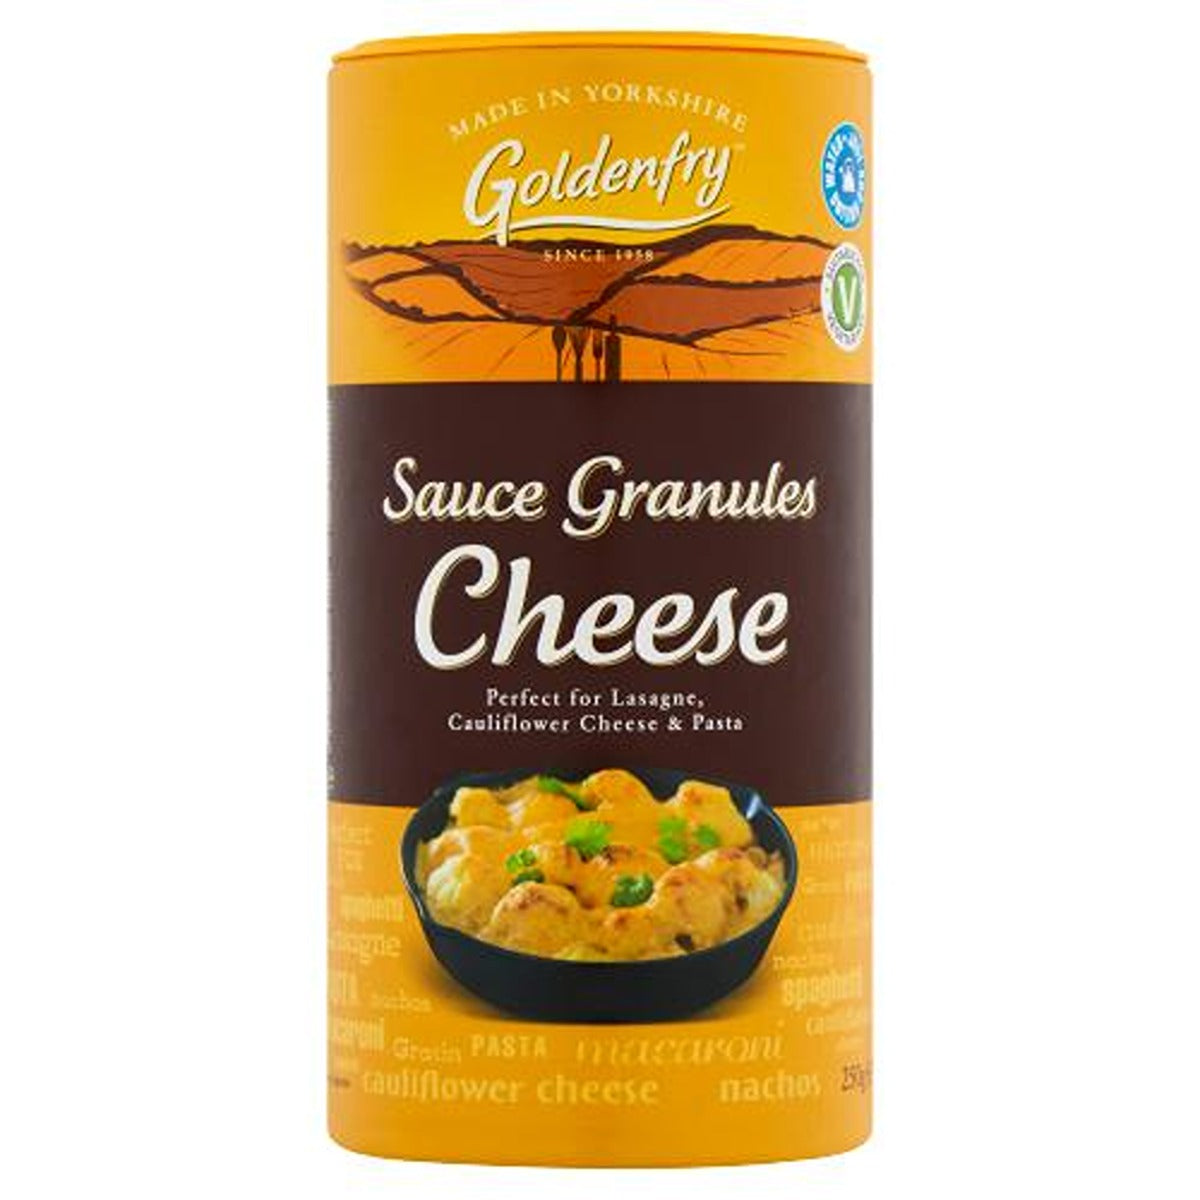 Goldenfry sauce granulated cheese.